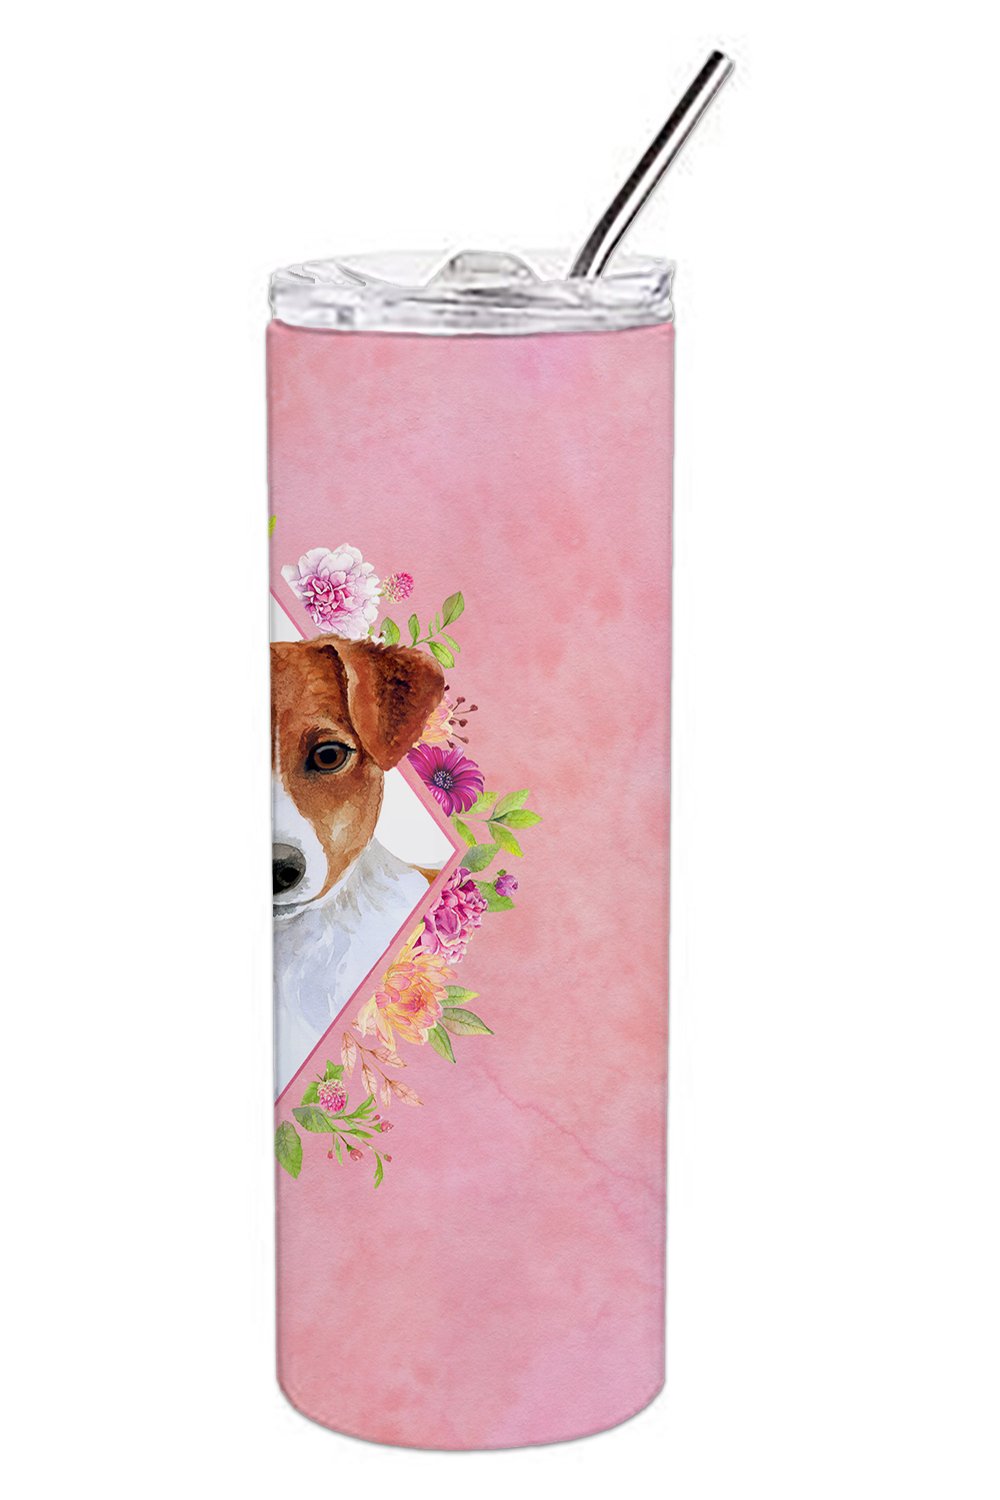 Jack Russell Terrier #2 Pink Flowers Double Walled Stainless Steel 20 oz Skinny Tumbler CK4156TBL20 by Caroline's Treasures